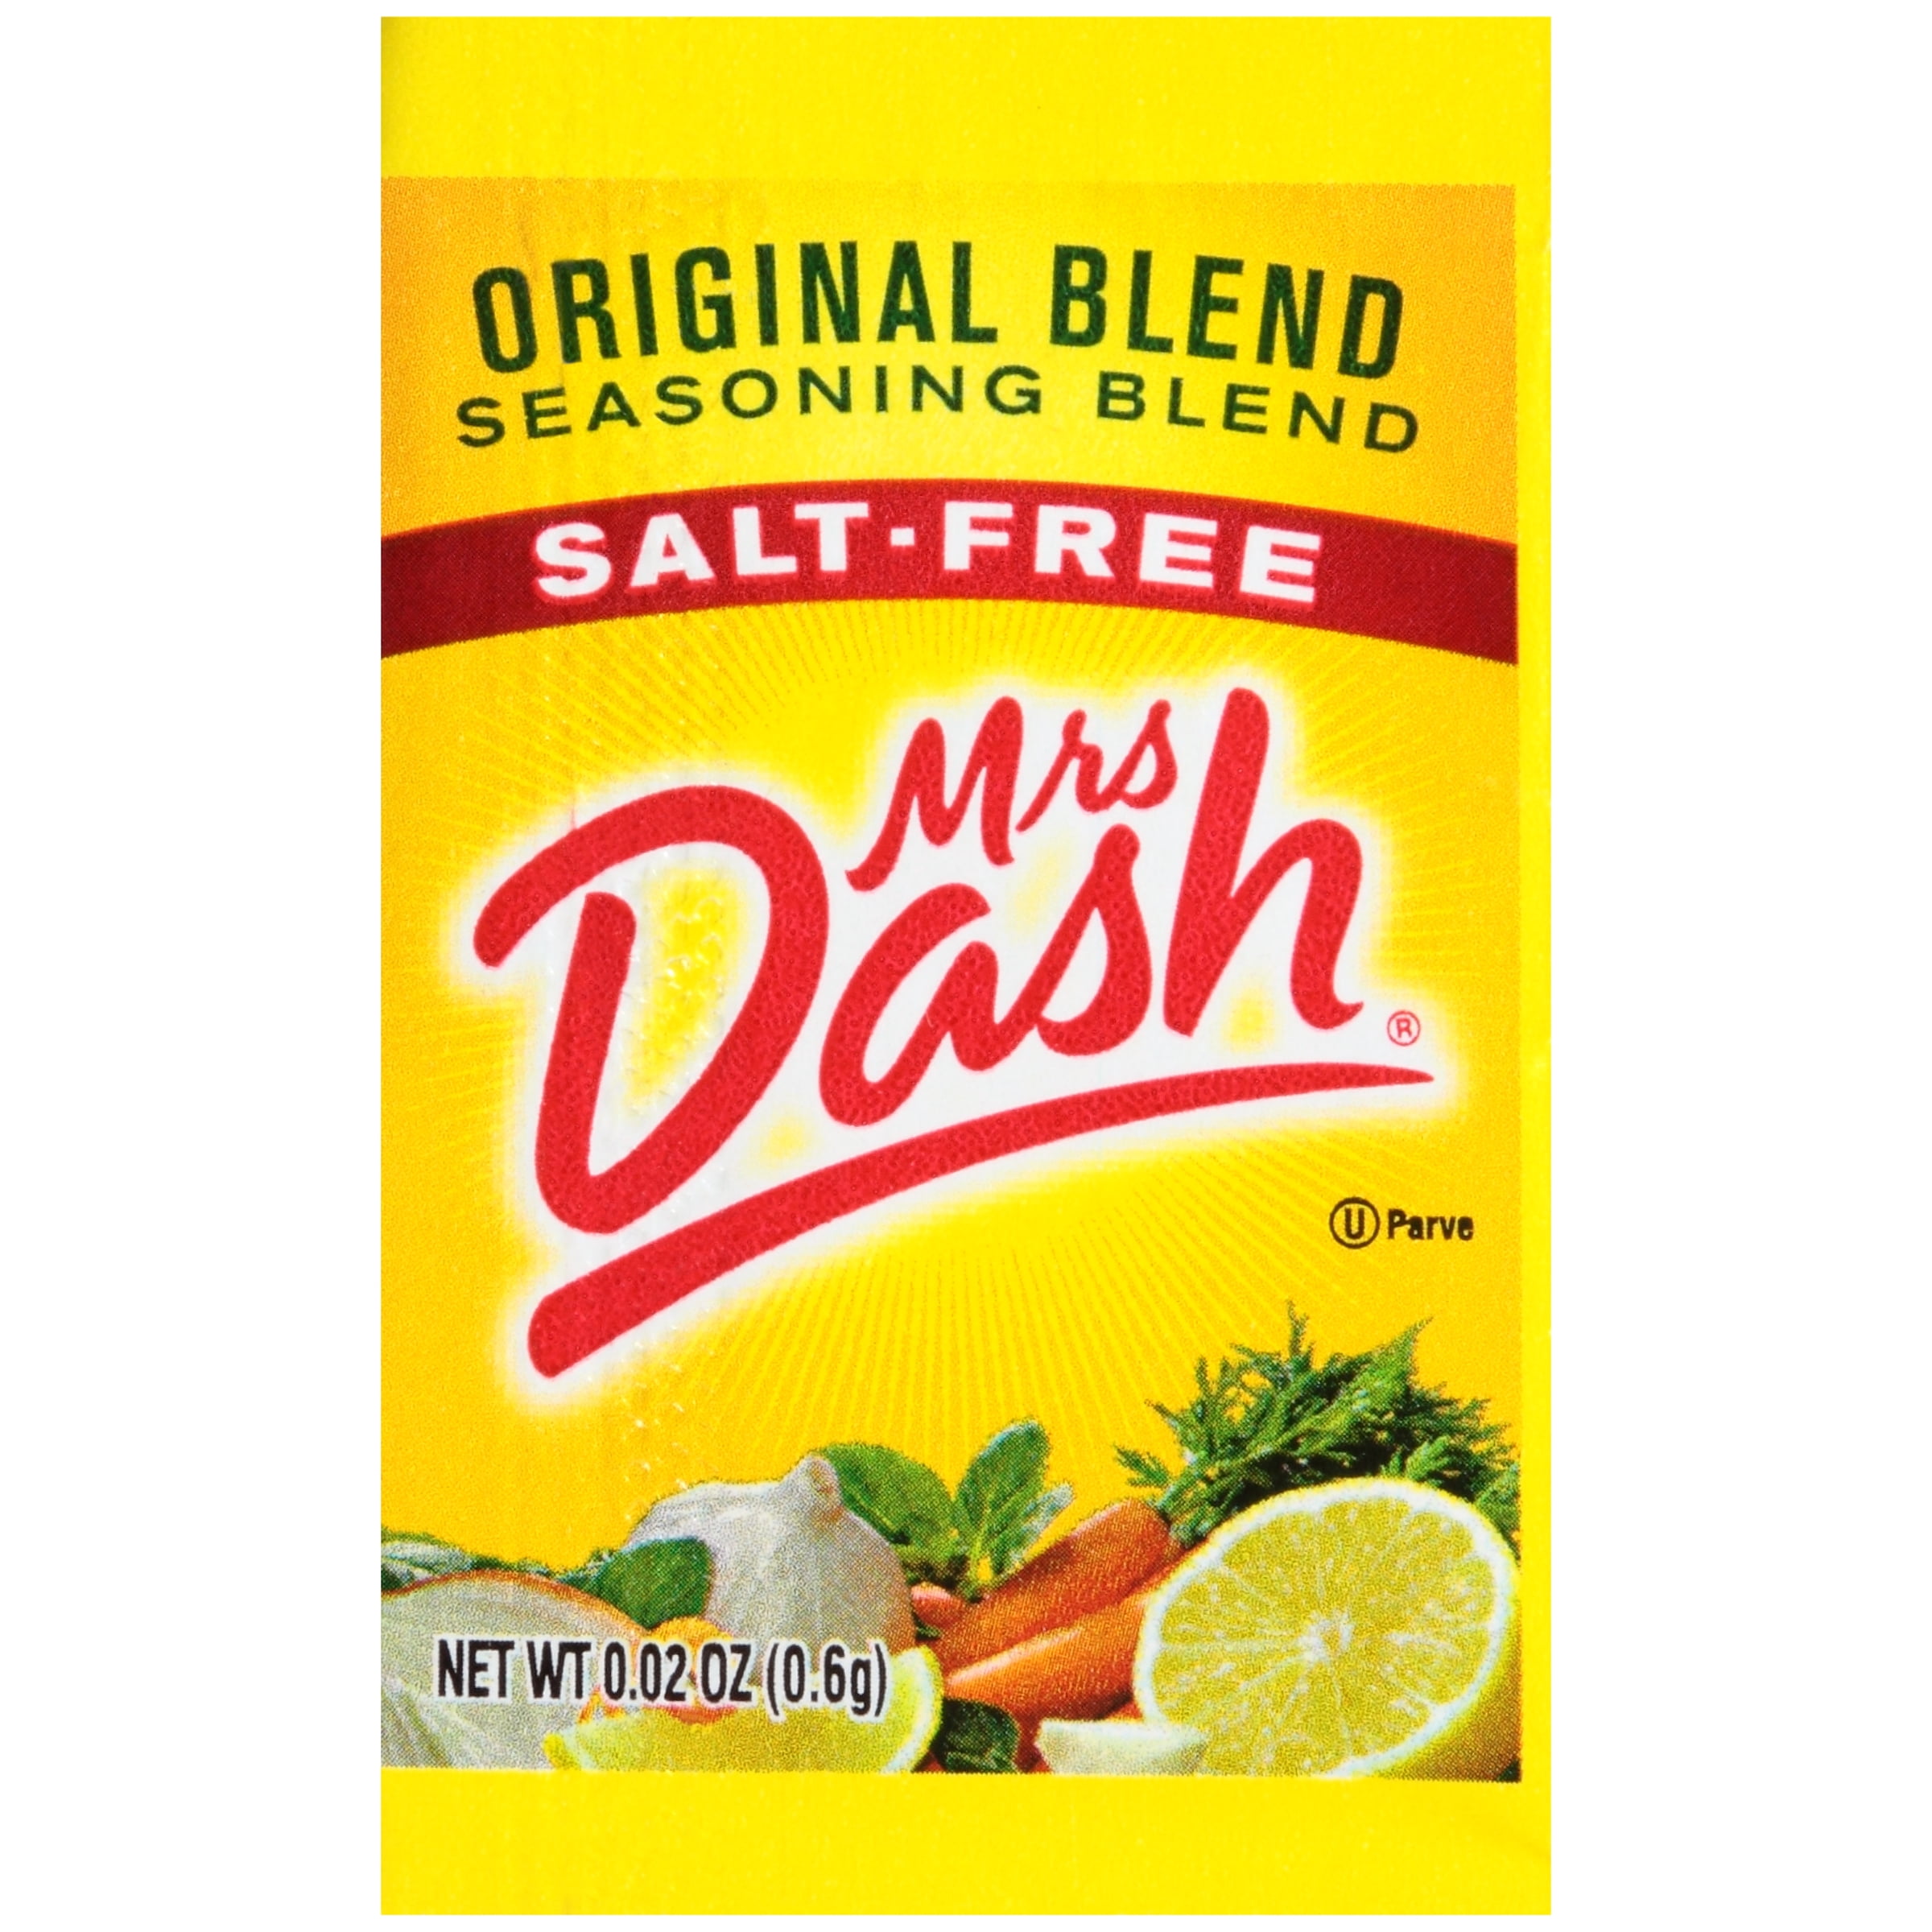 Mrs. Dash Seasoning Copycat - The Midnight Baker